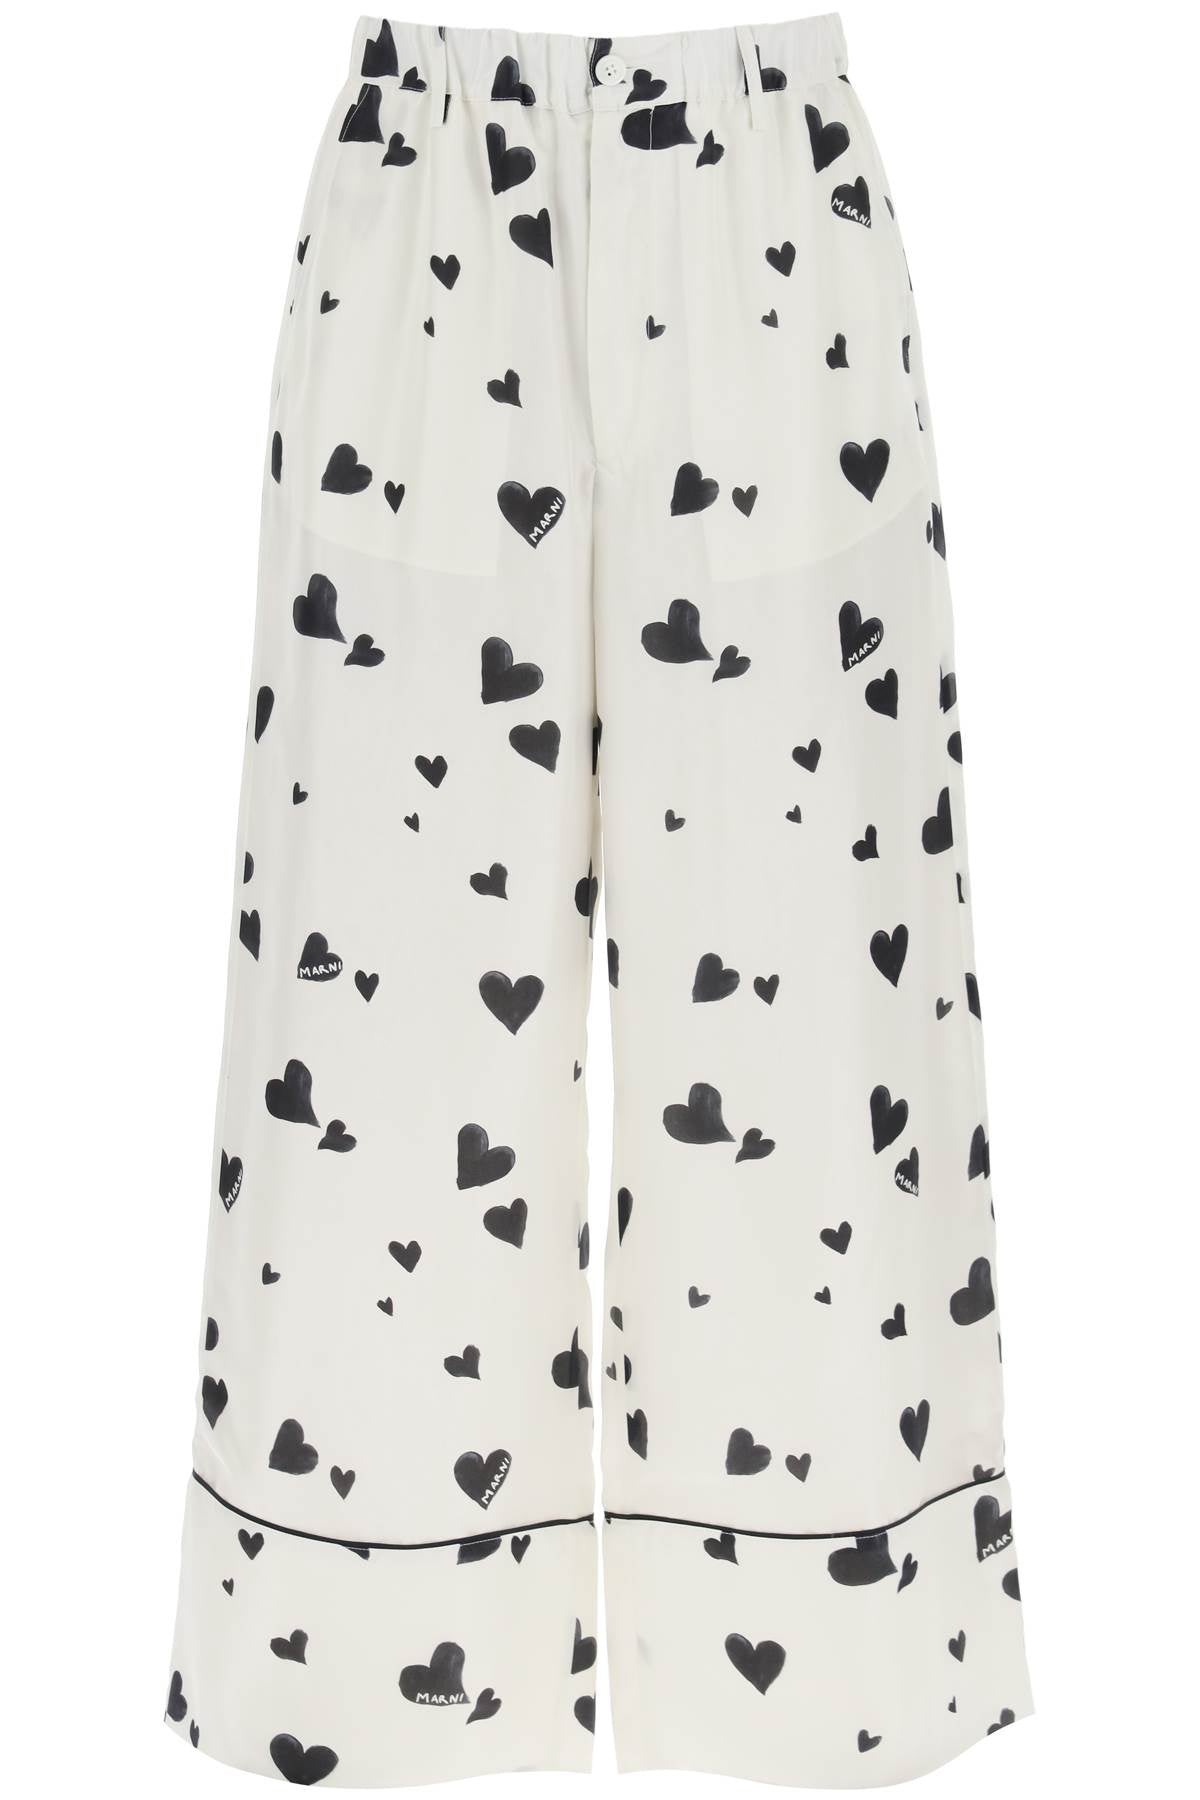 Marni pajama pants with bunch of hearts motif-0